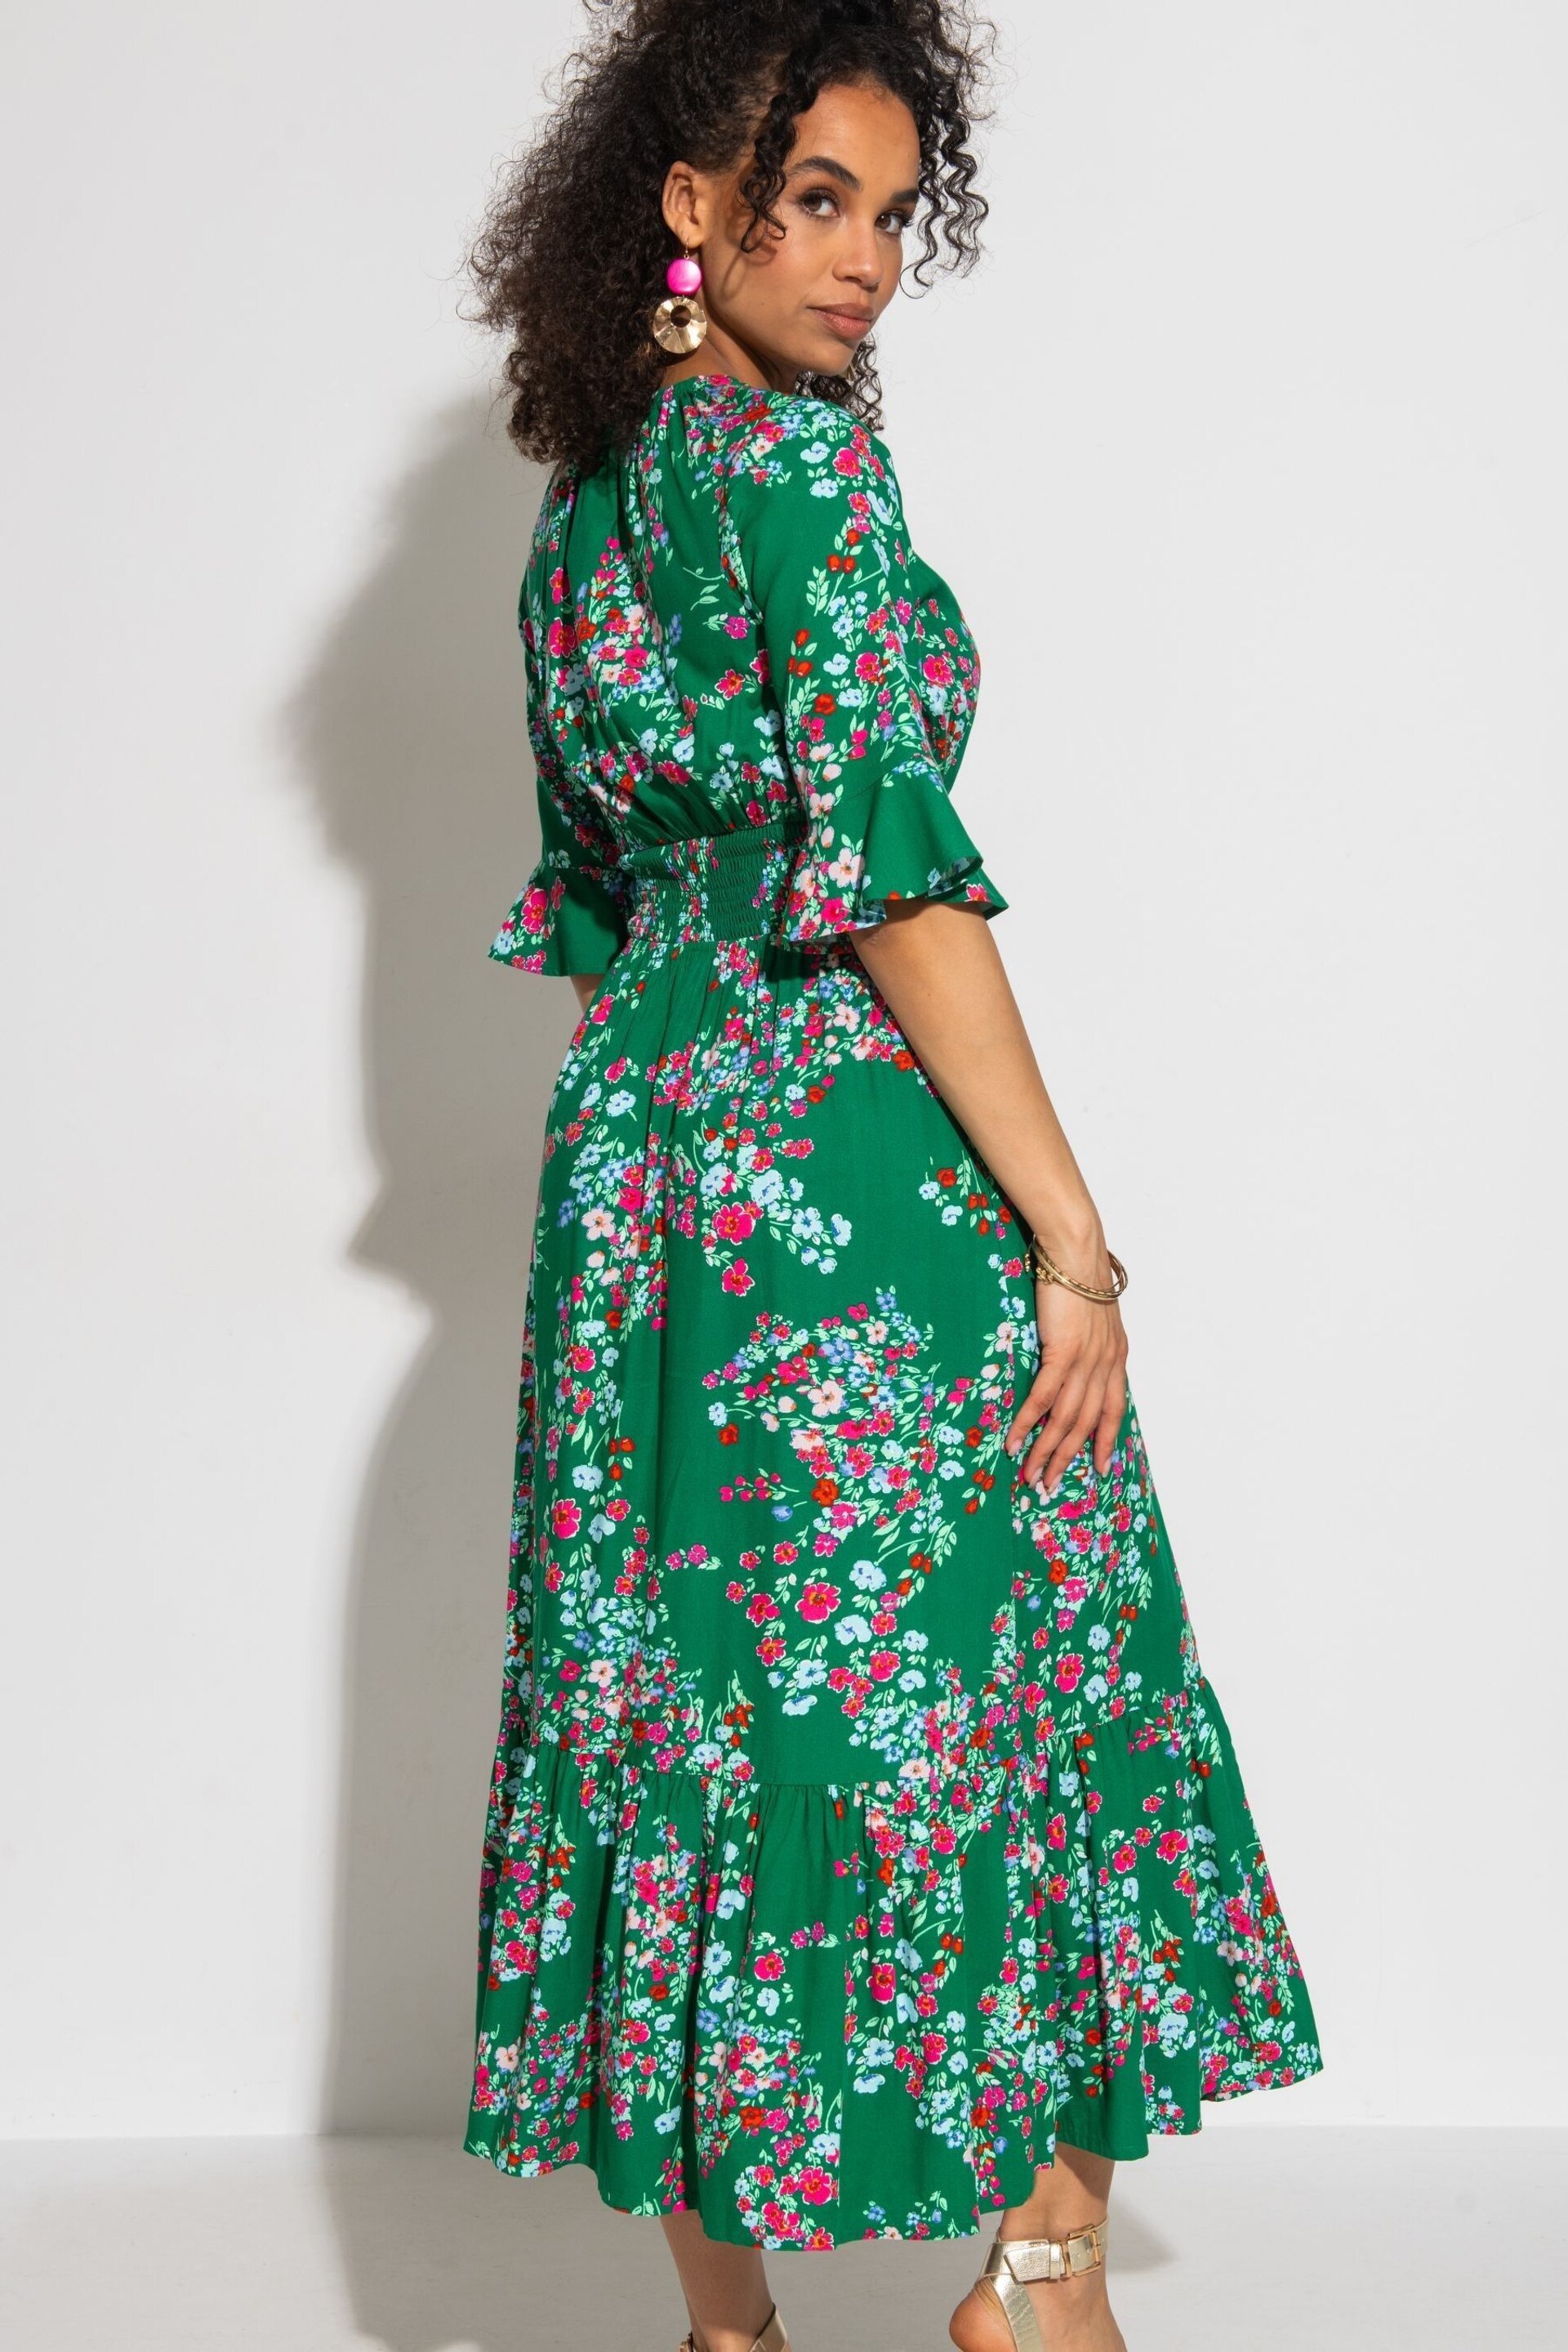 Pour Moi Green Multi Floral Carmen Fuller Bust LENZING™ ECOVERO™ Viscose Elasticated Neckline Midaxi Dress - Image 2 of 4